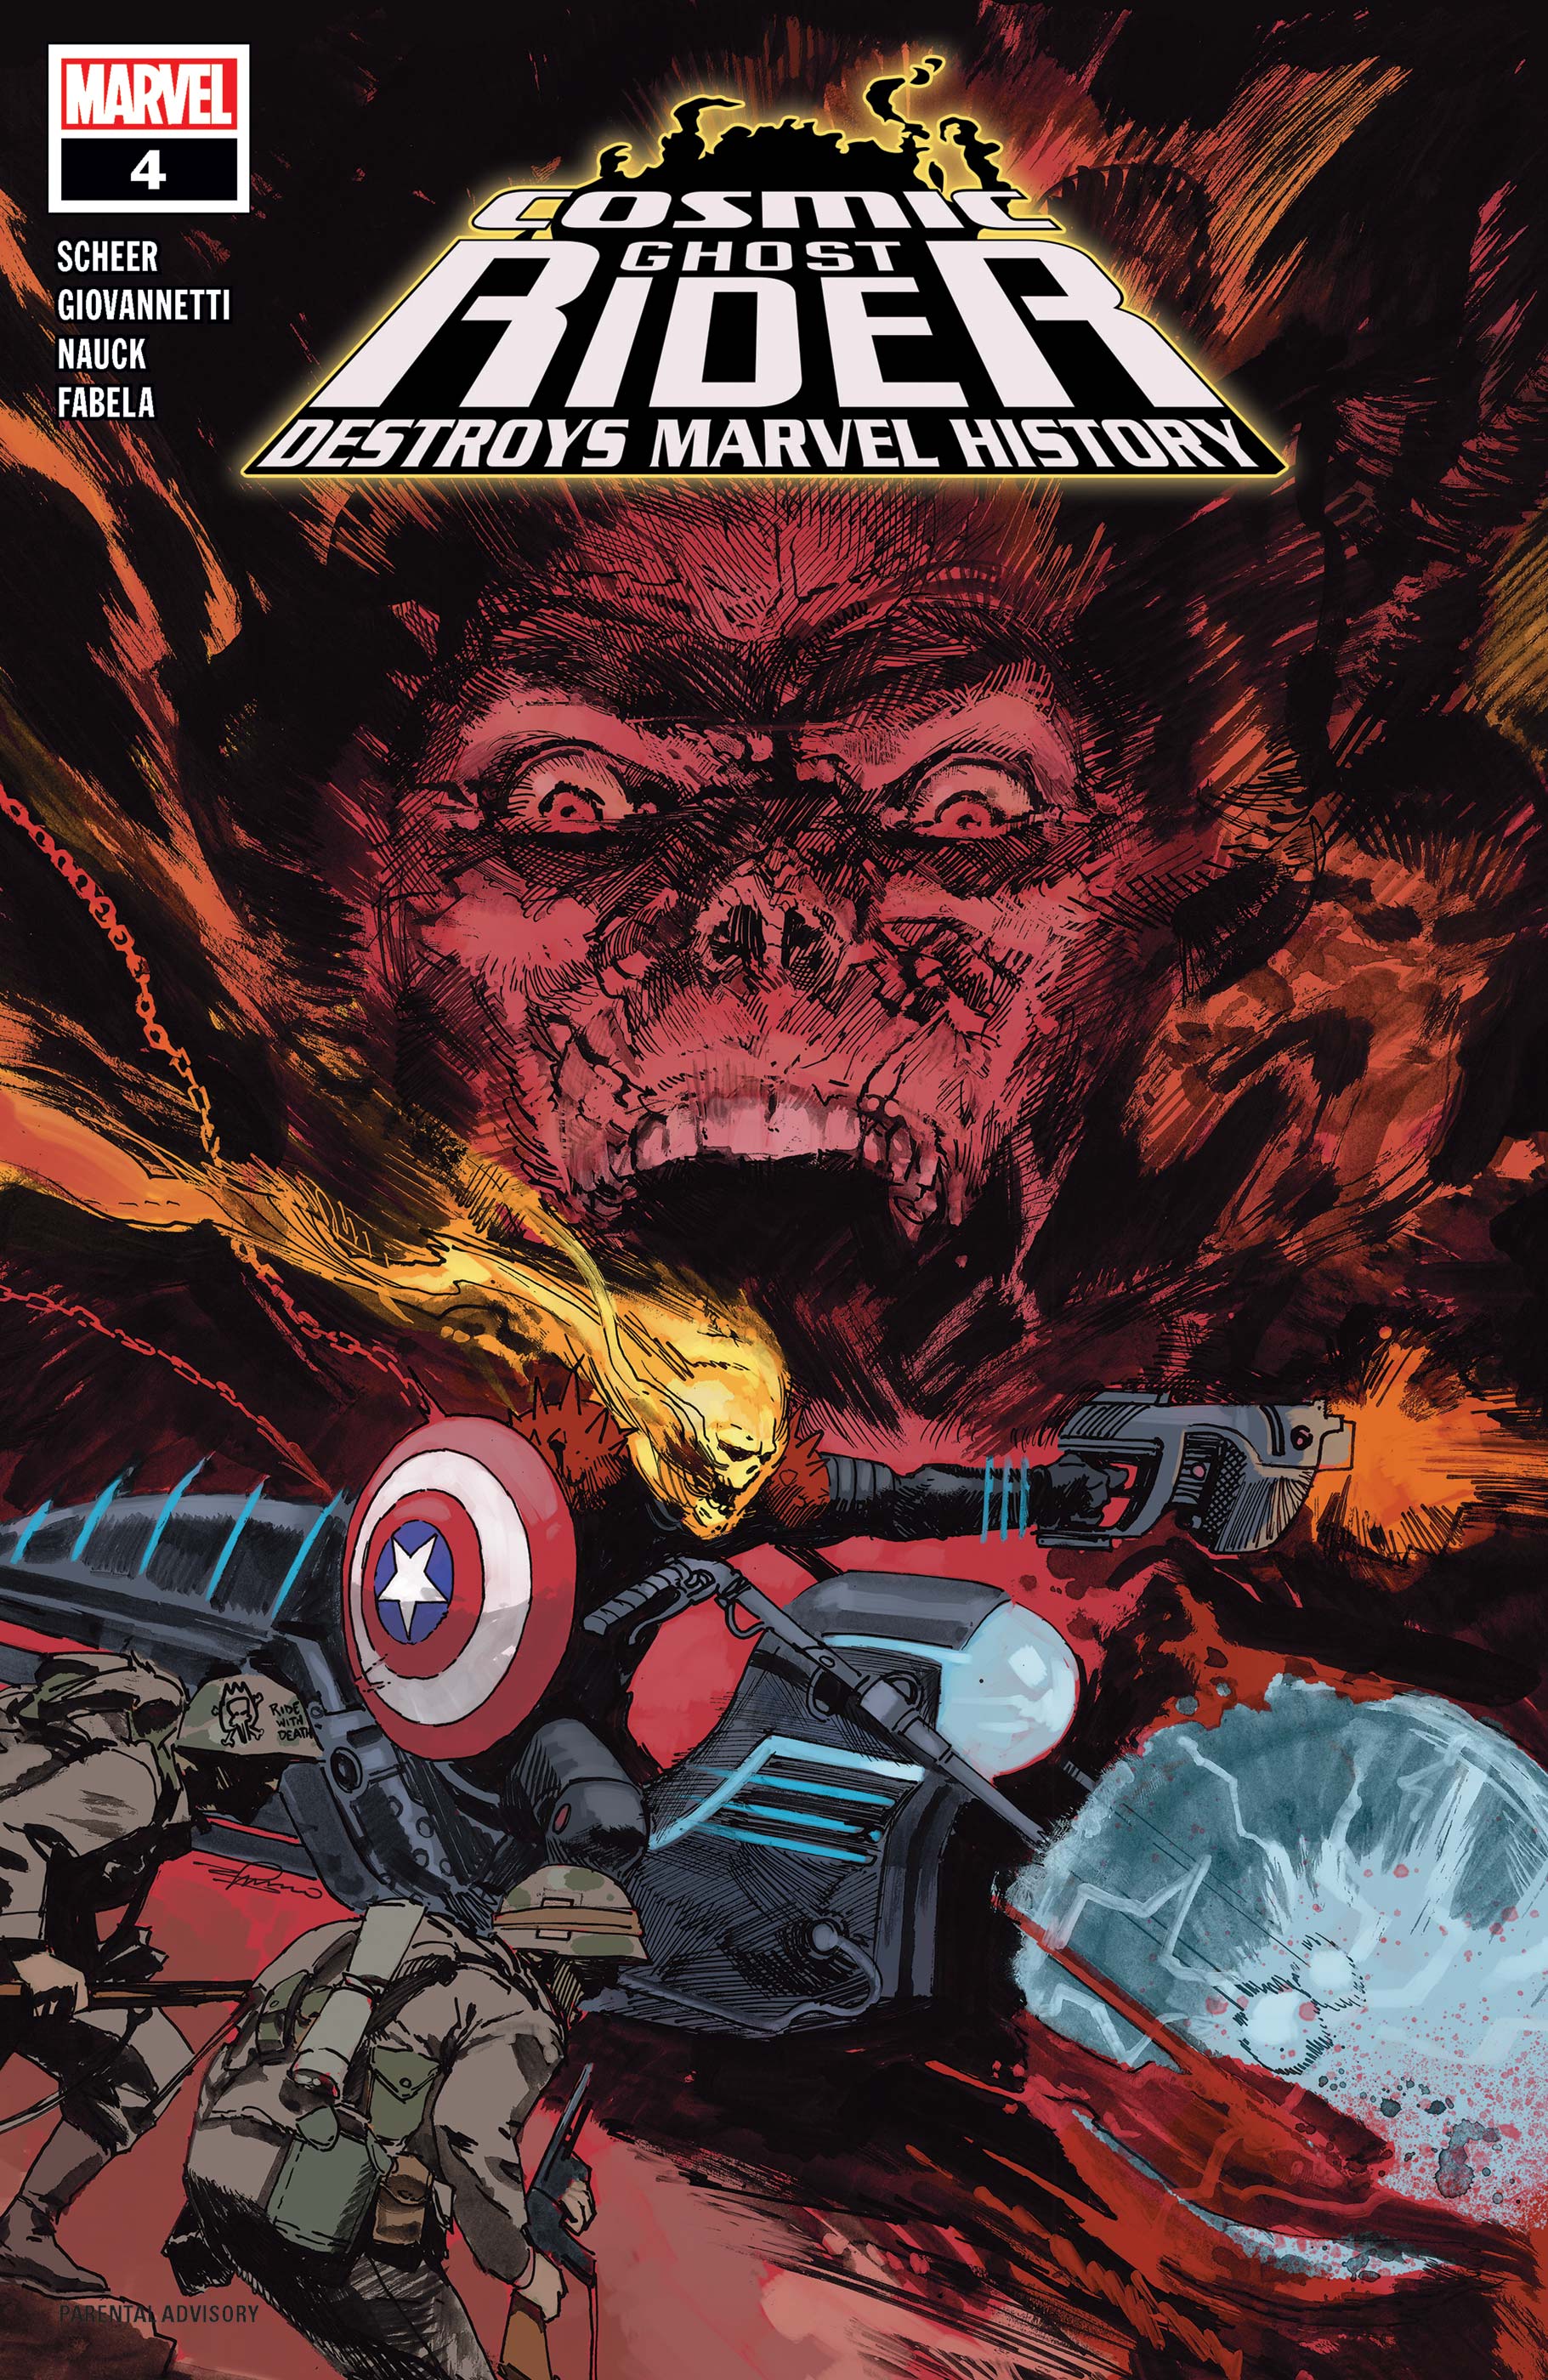 Cosmic Ghost Rider Destroys Marvel History (2019) #4